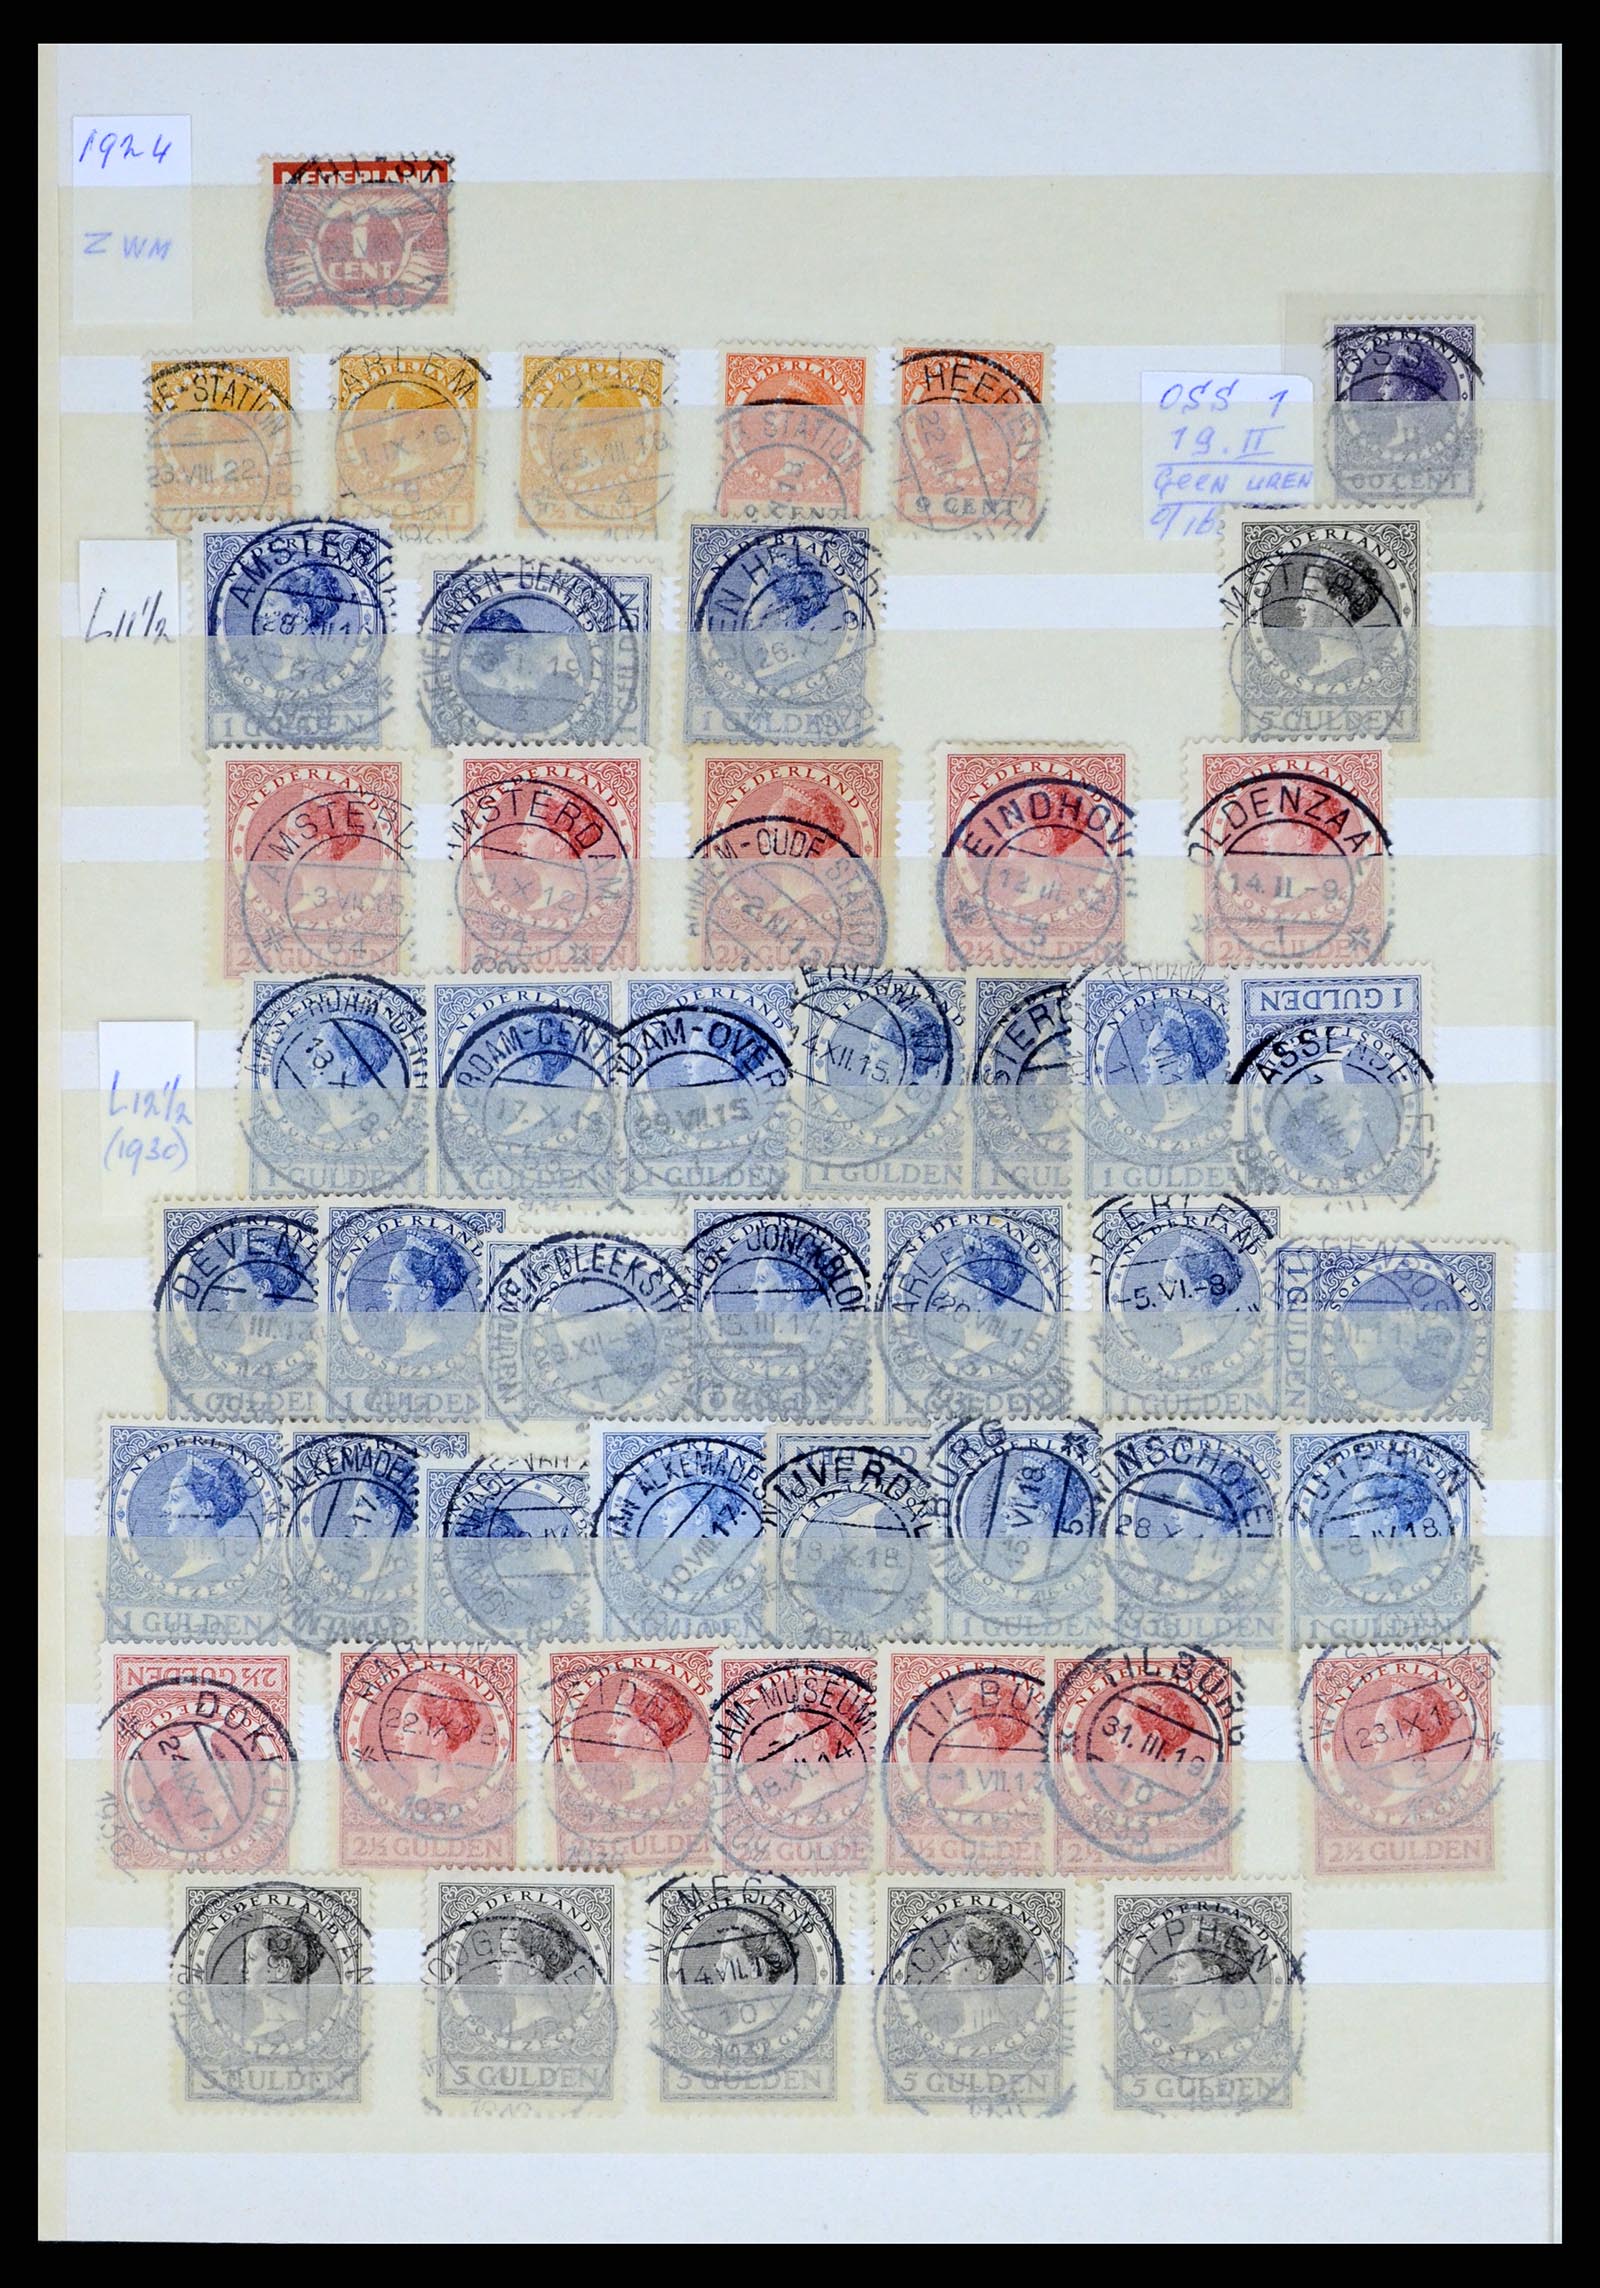 37424 004 - Stamp collection 37424 Netherlands shortbar cancels.